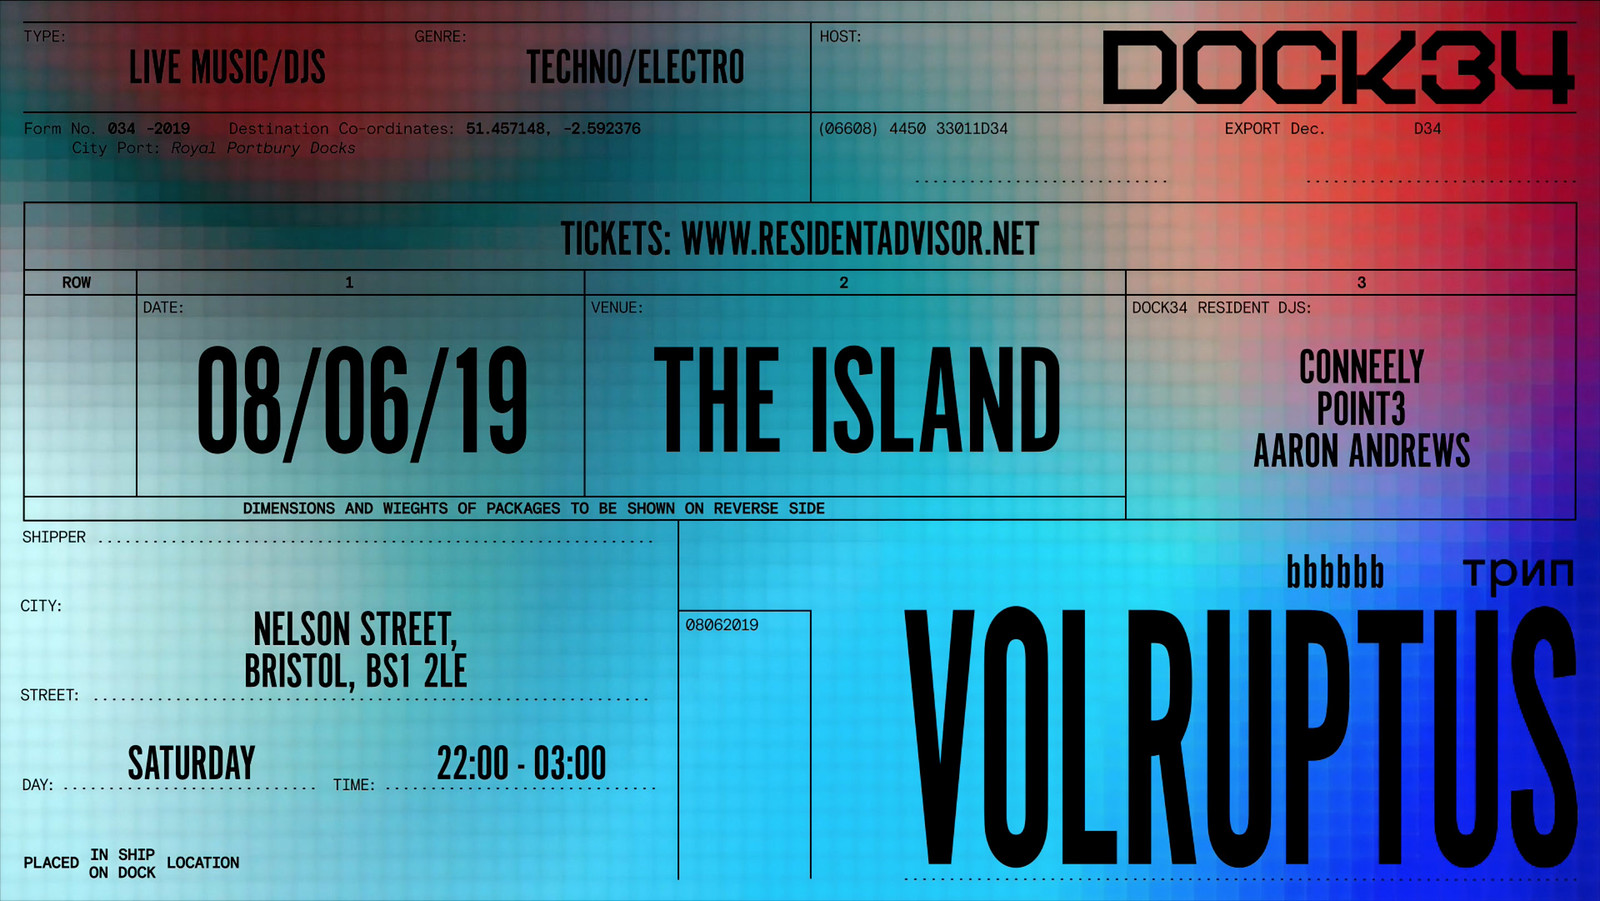 Dock34 Presents: Volruptus at The Island